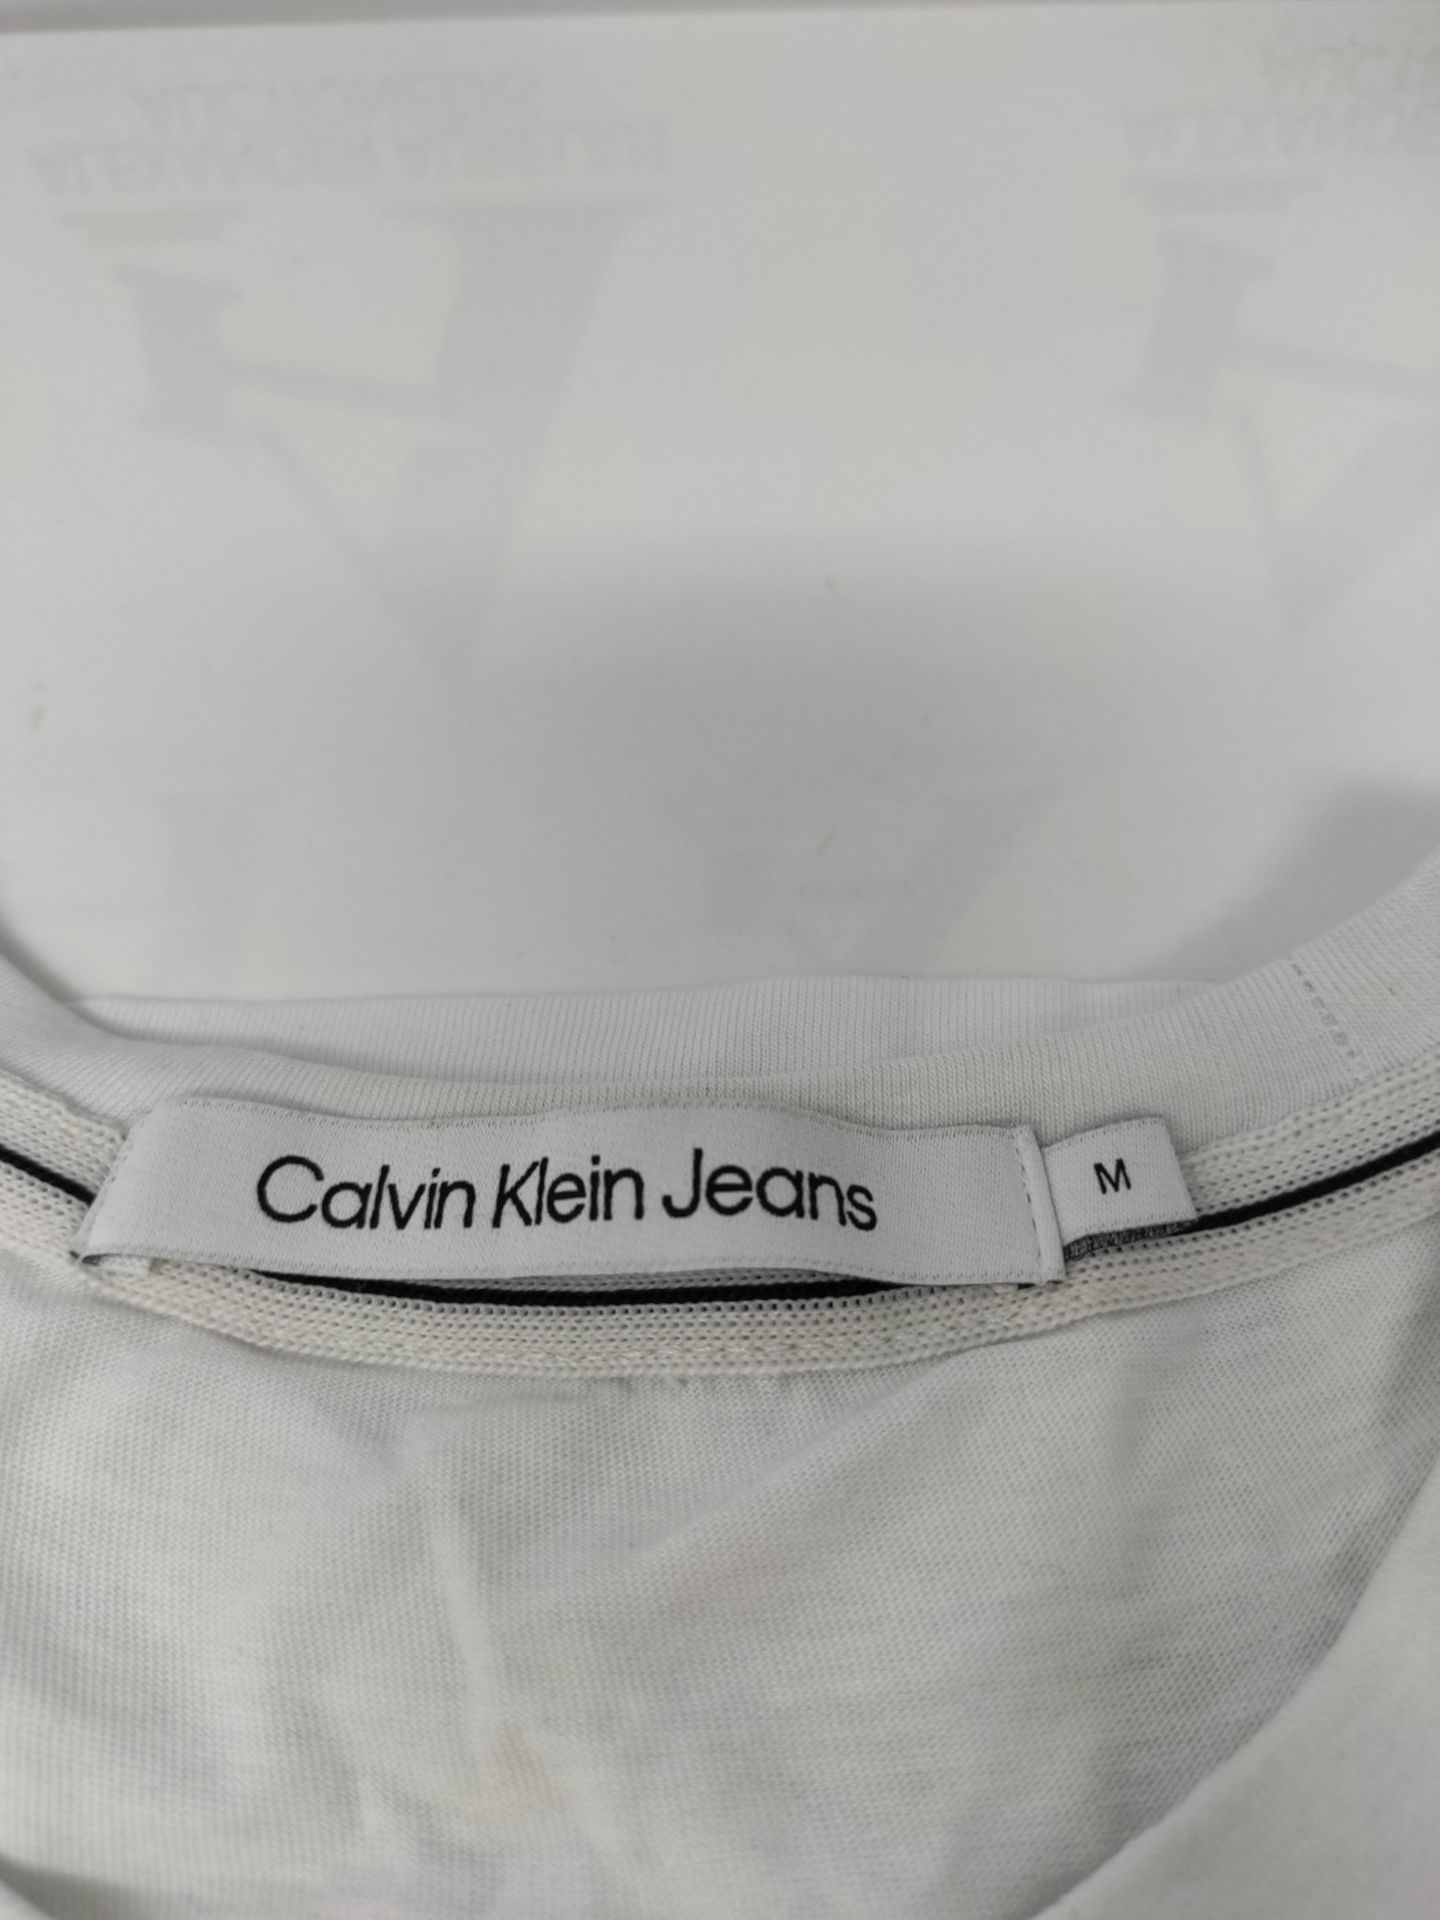 Calvin Klein Jeans Men's CK ESSENTIAL SLIM TEE, Bright White, M - Image 3 of 3